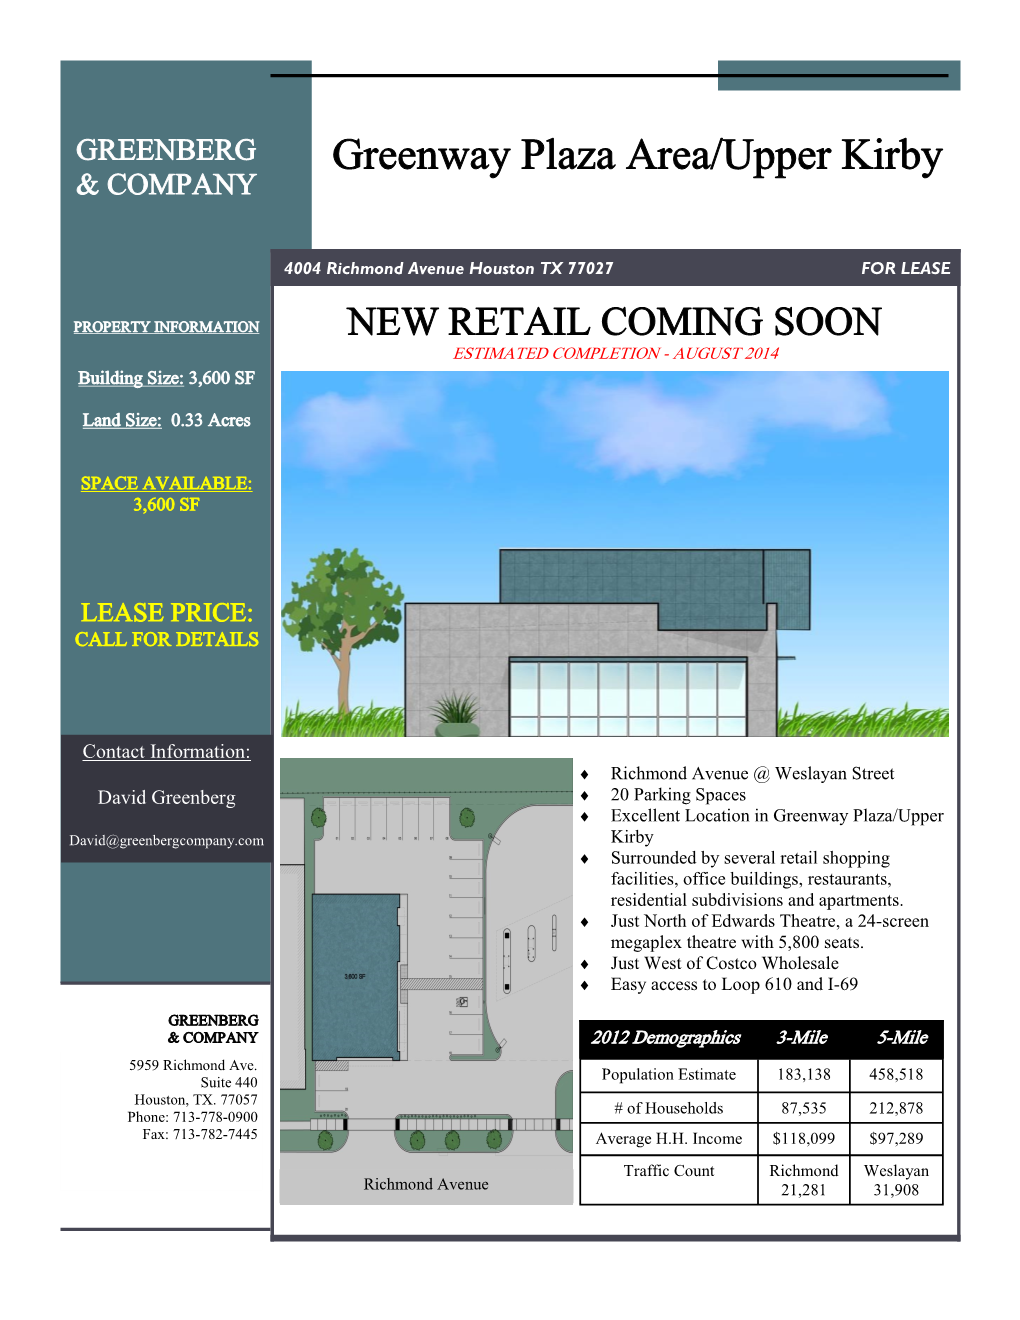 Greenway Plaza Area/Upper Kirby & COMPANY